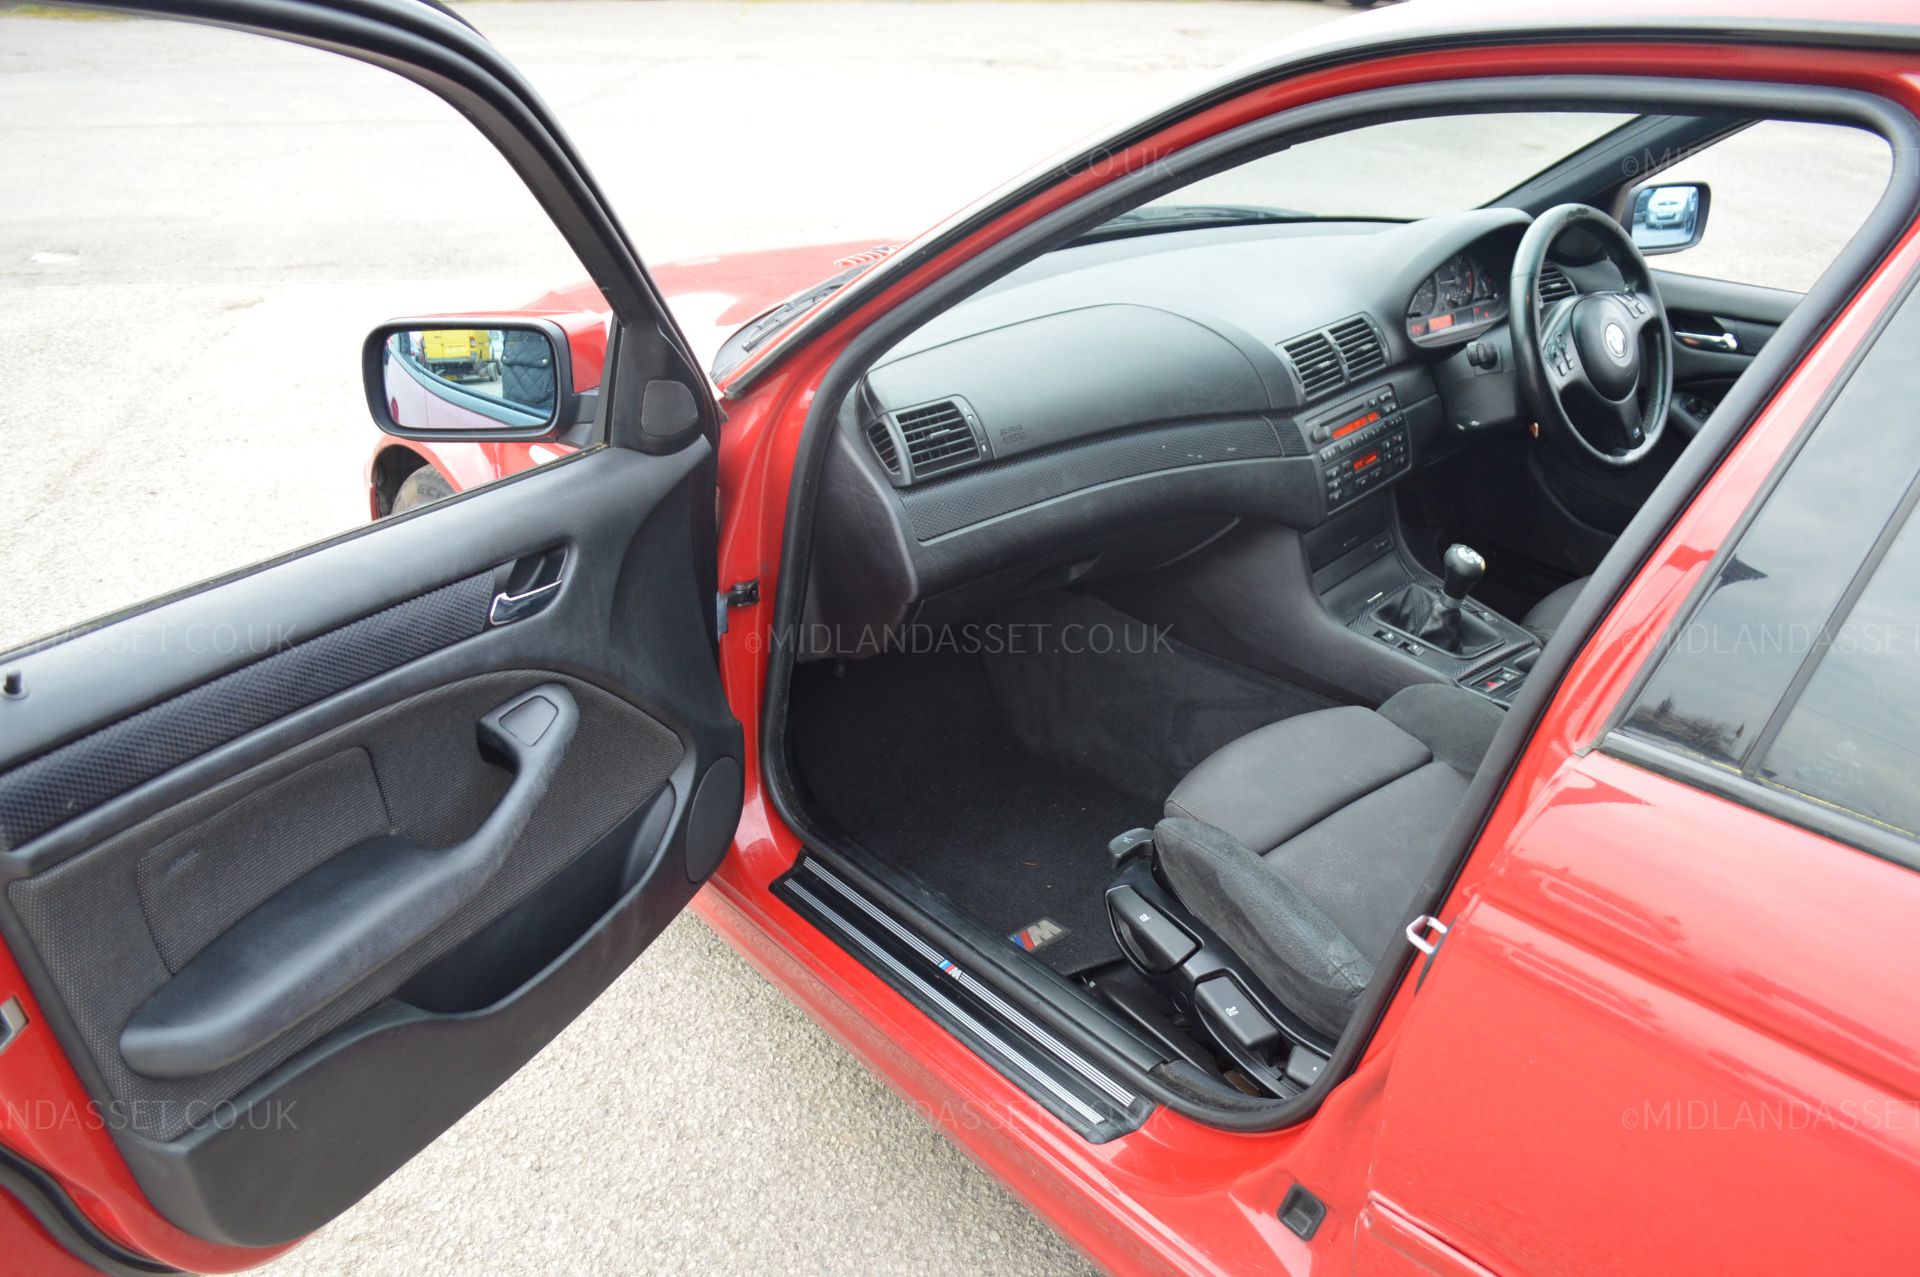 2004/04 REG BMW 320D SPORT 2.0 MANUAL METALLIC RED *NO VAT* - Image 17 of 26